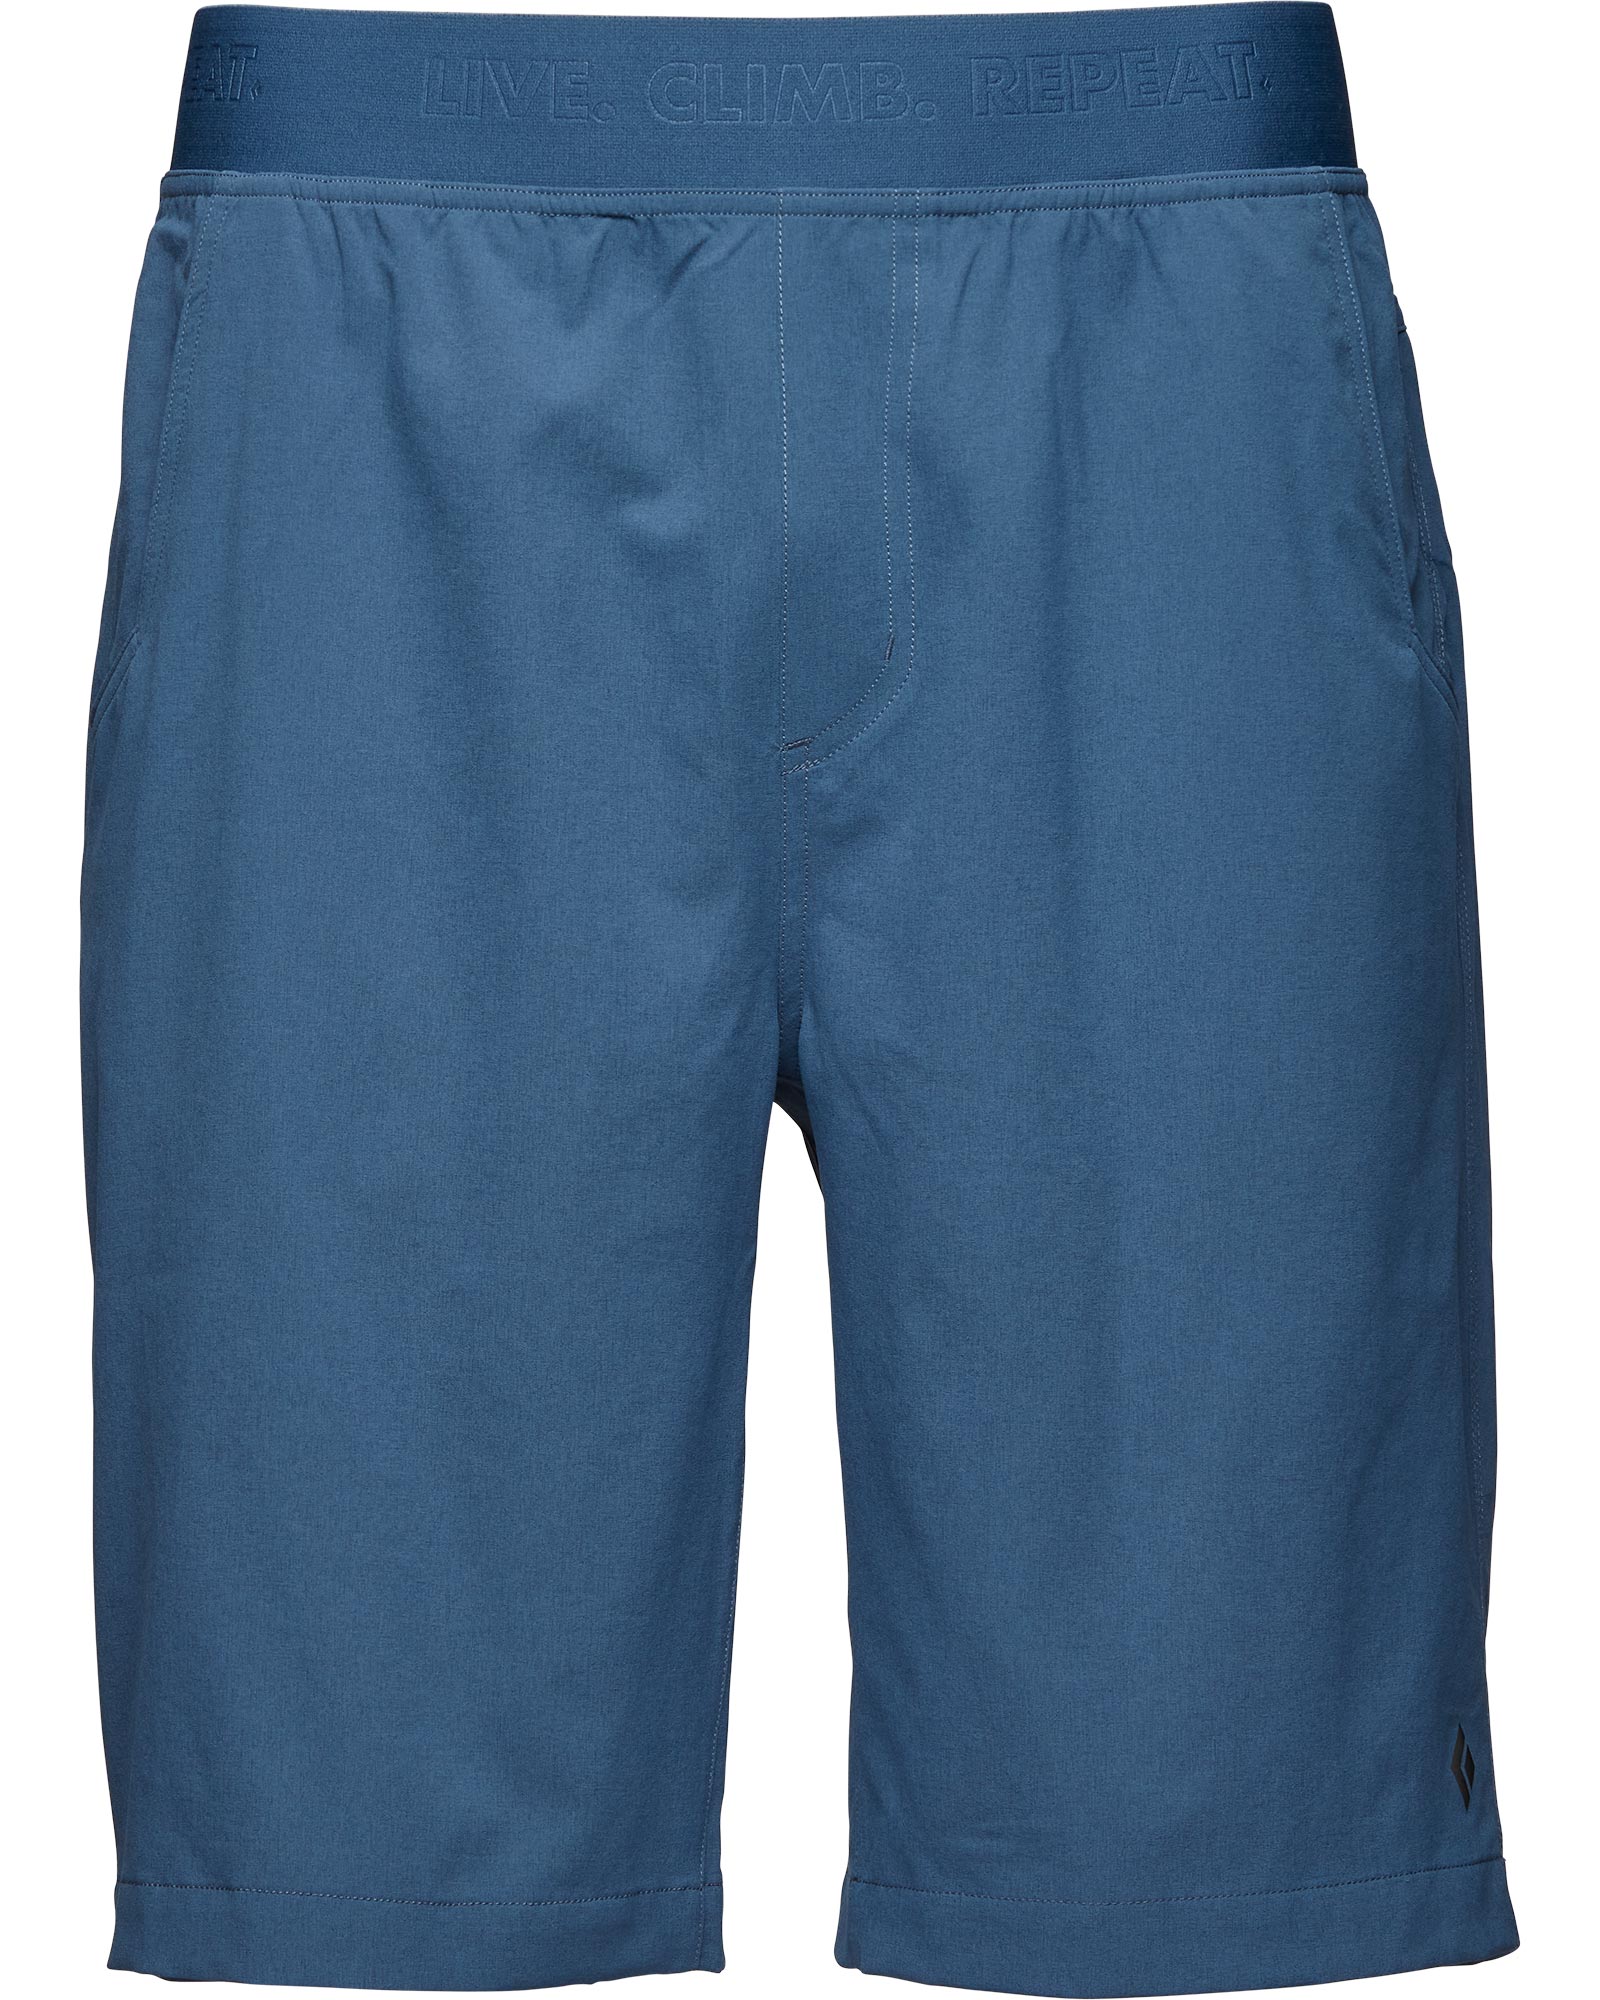 Black Diamond Sierra Men’s Shorts - Ink Blue M